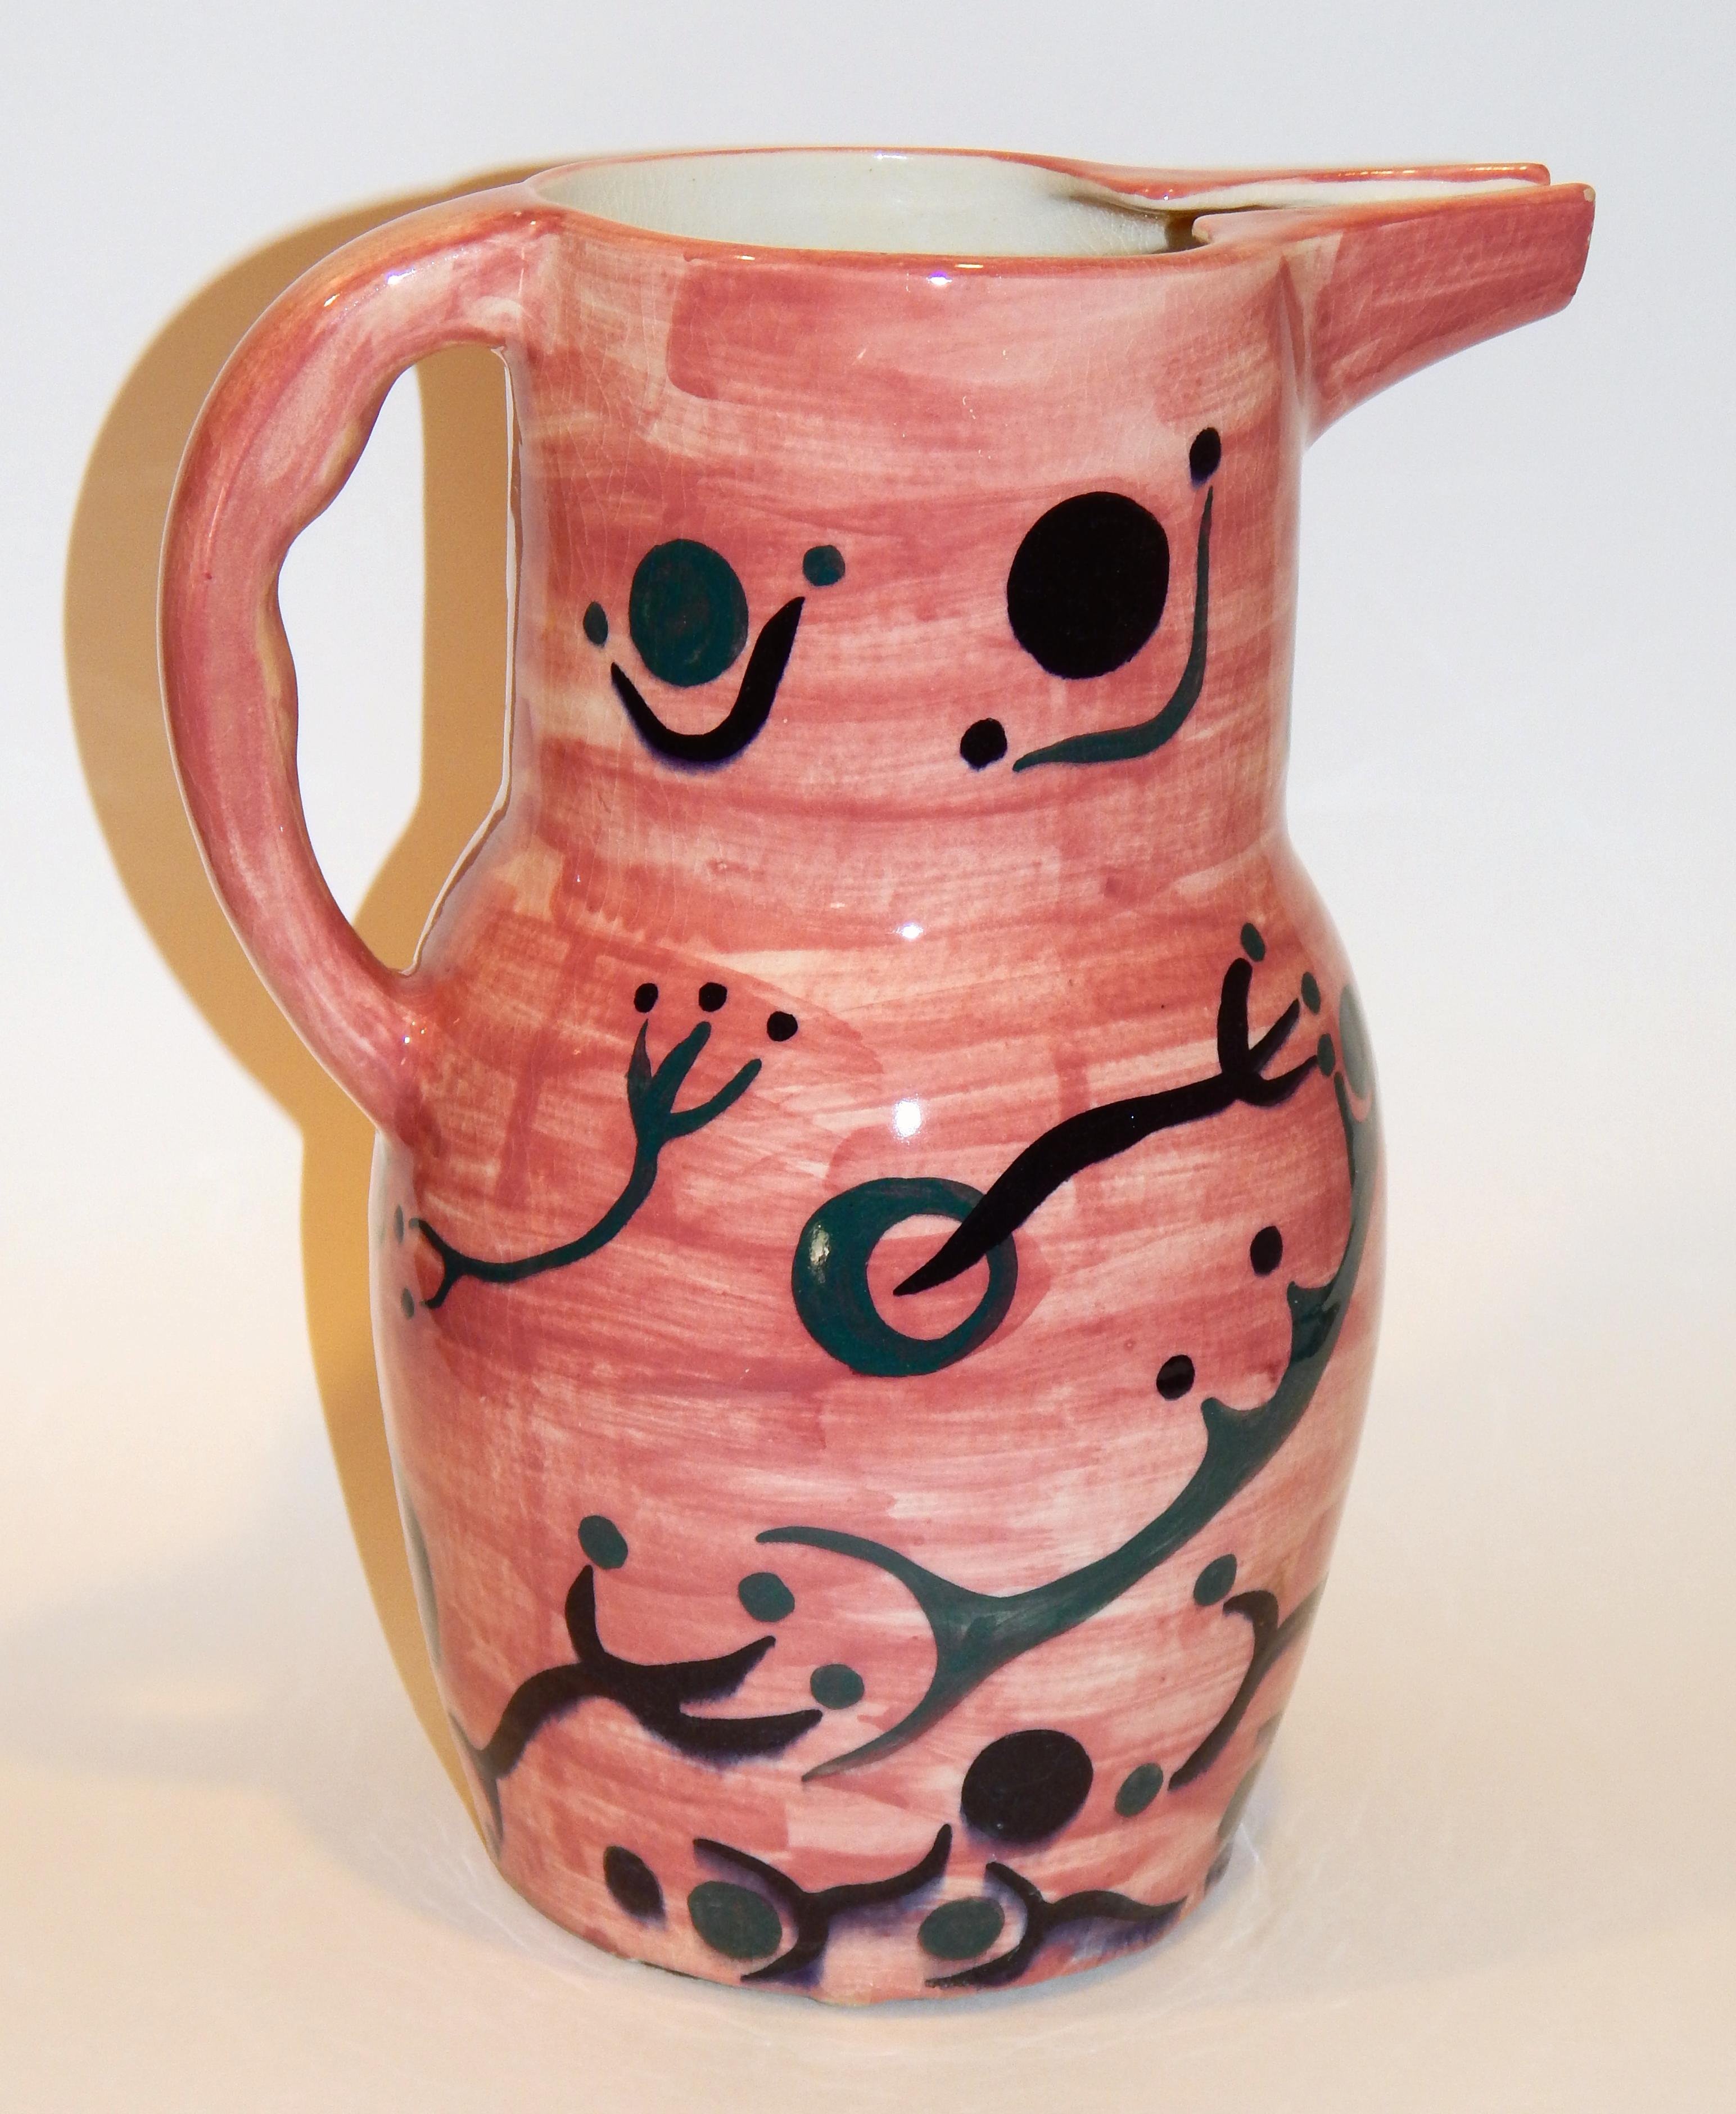 Wonderful ceramic art pottery pitcher designed by Julio de Diego for Stonelain. 
Measures: 11